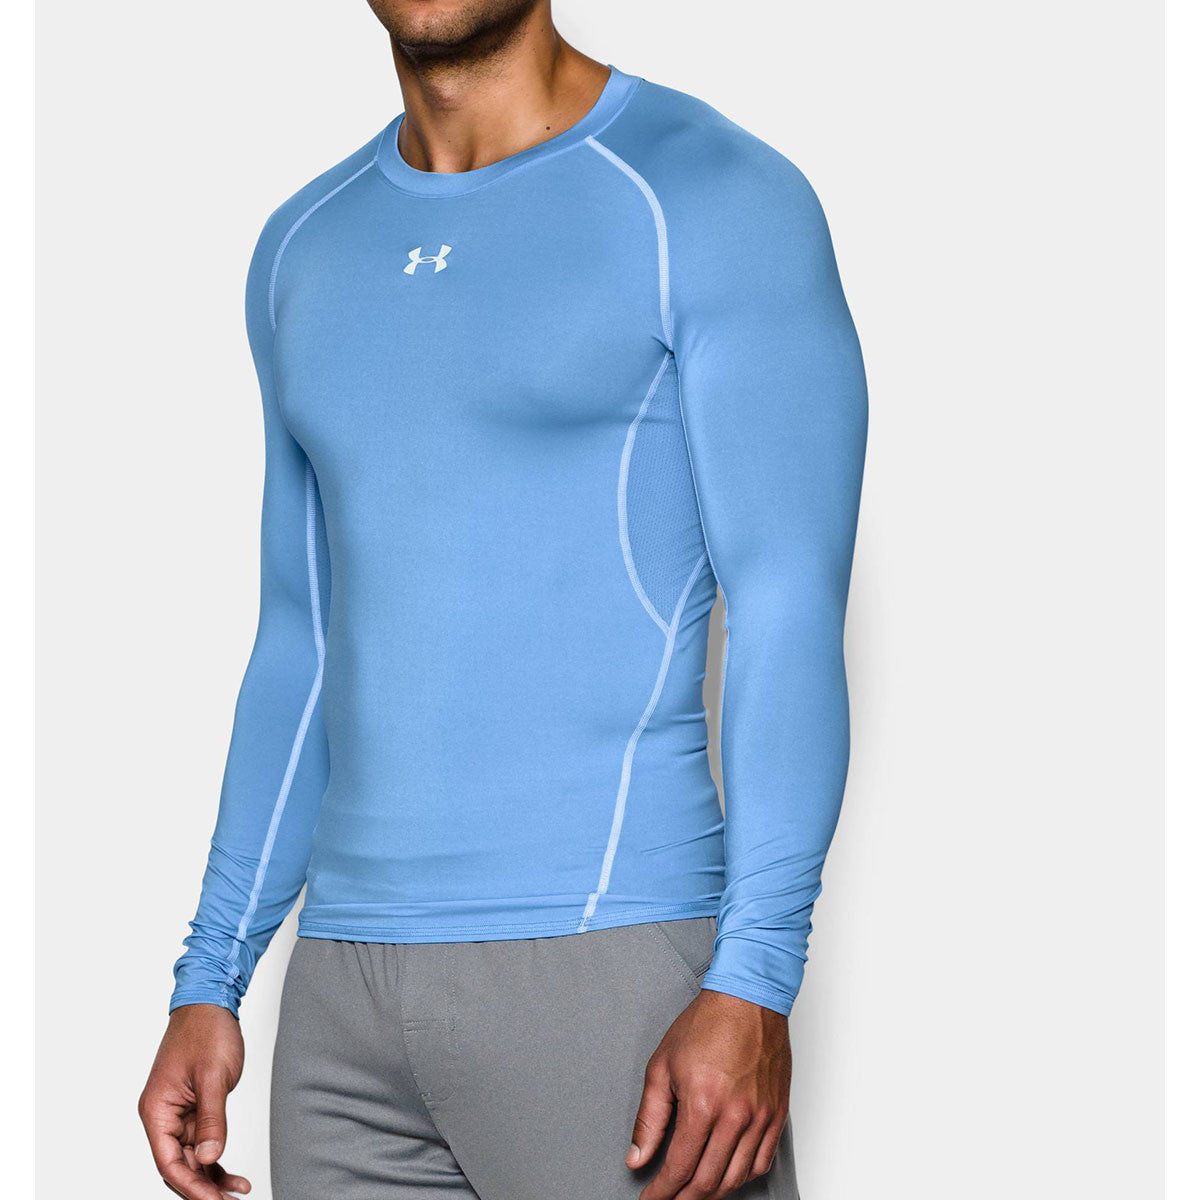 Armour Men's Carolina Blue HeatGear Armour L/S Compression Shirt